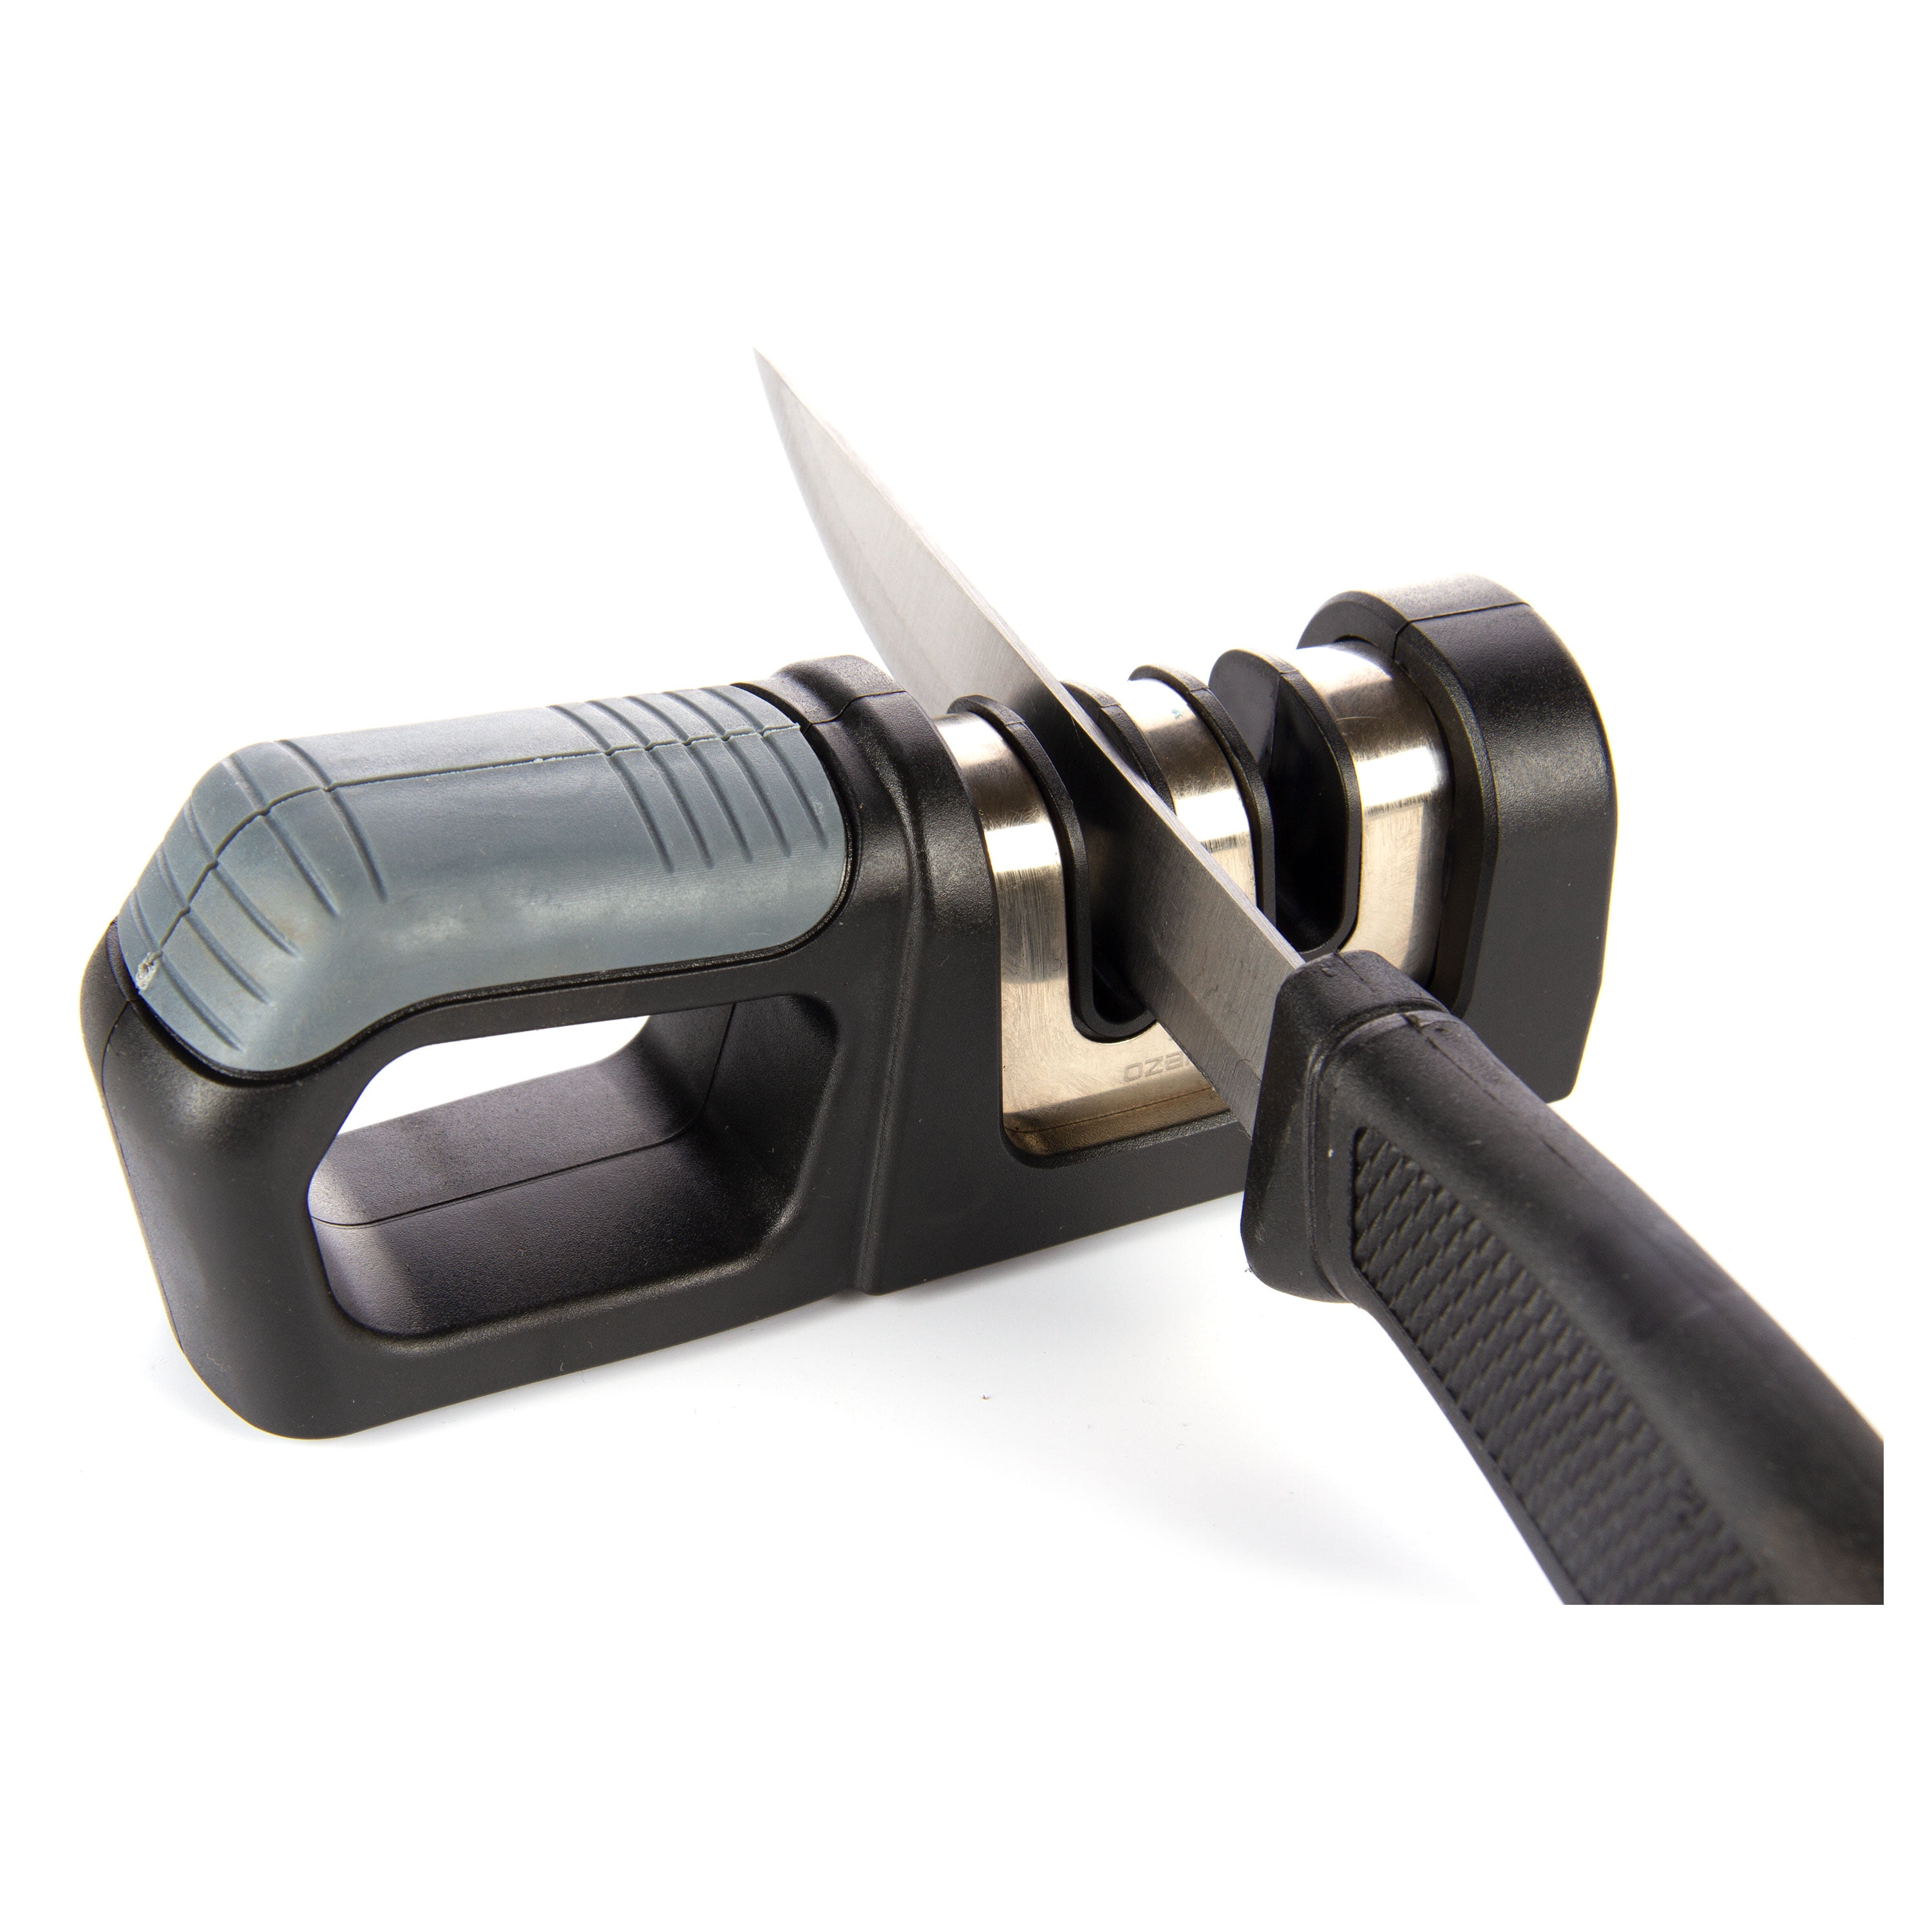 Handheld Knife Sharpener – AttractionMART